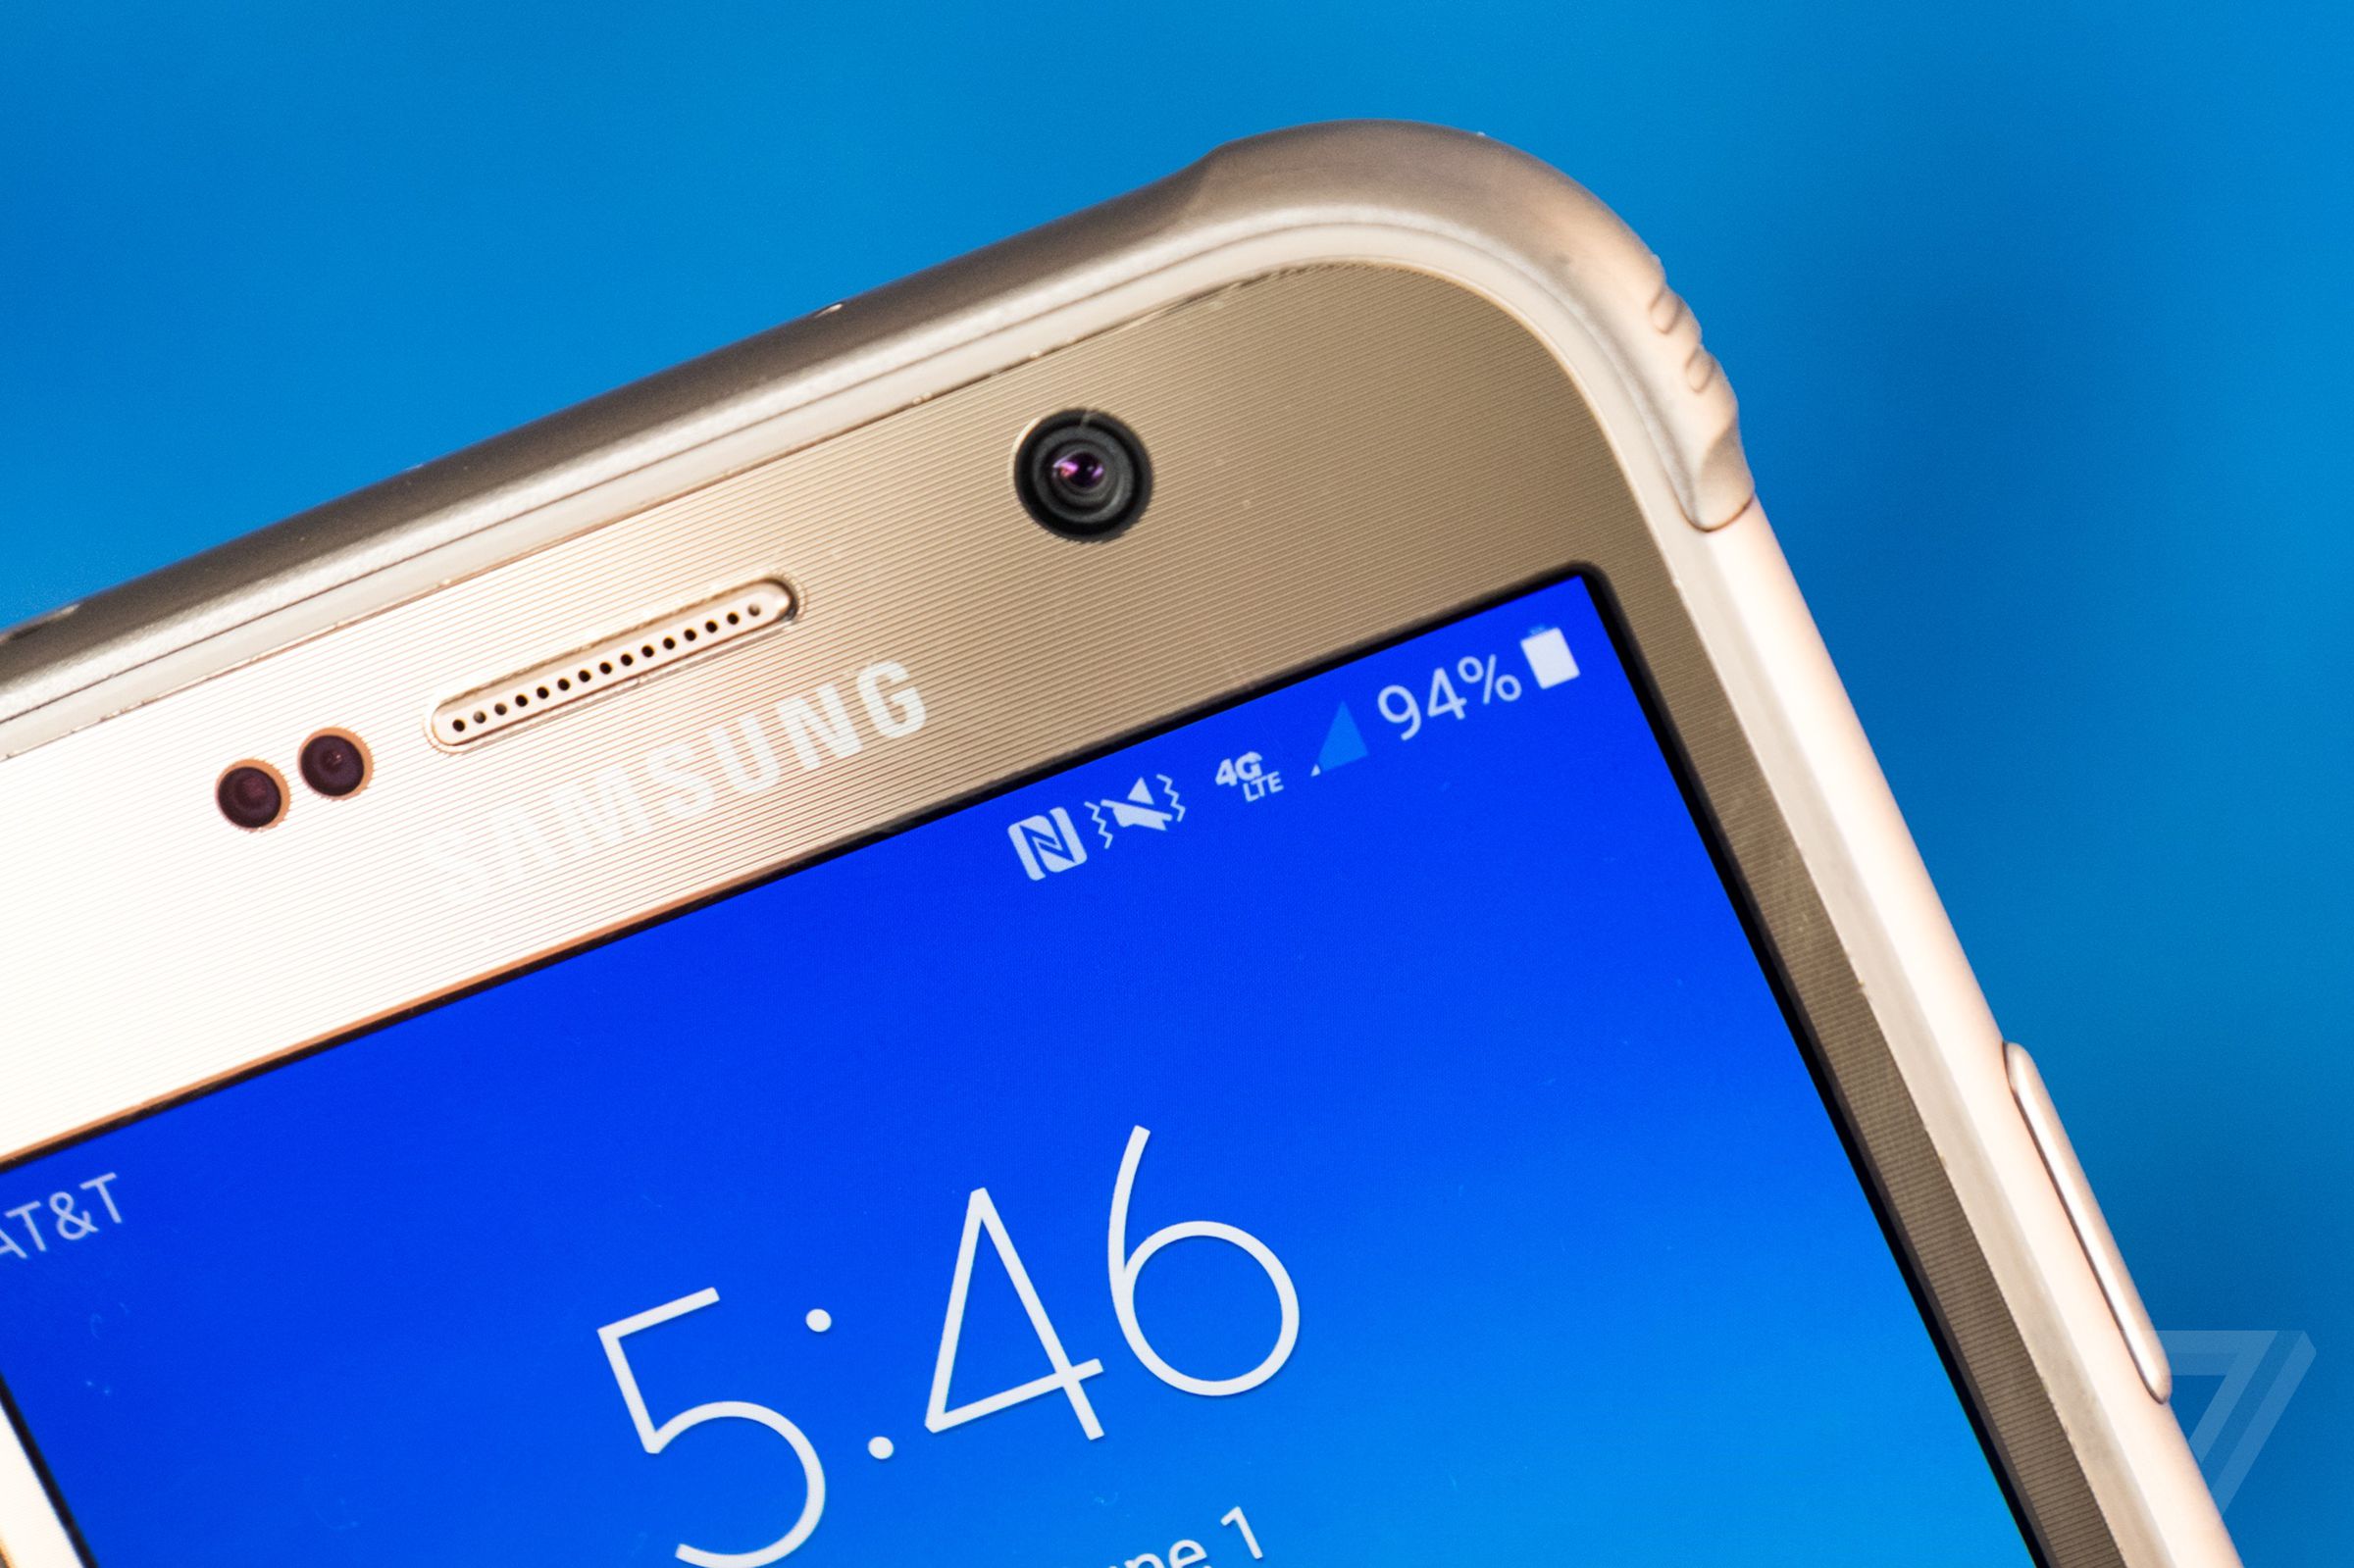 Samsung Galaxy S7 Active hands-on photos